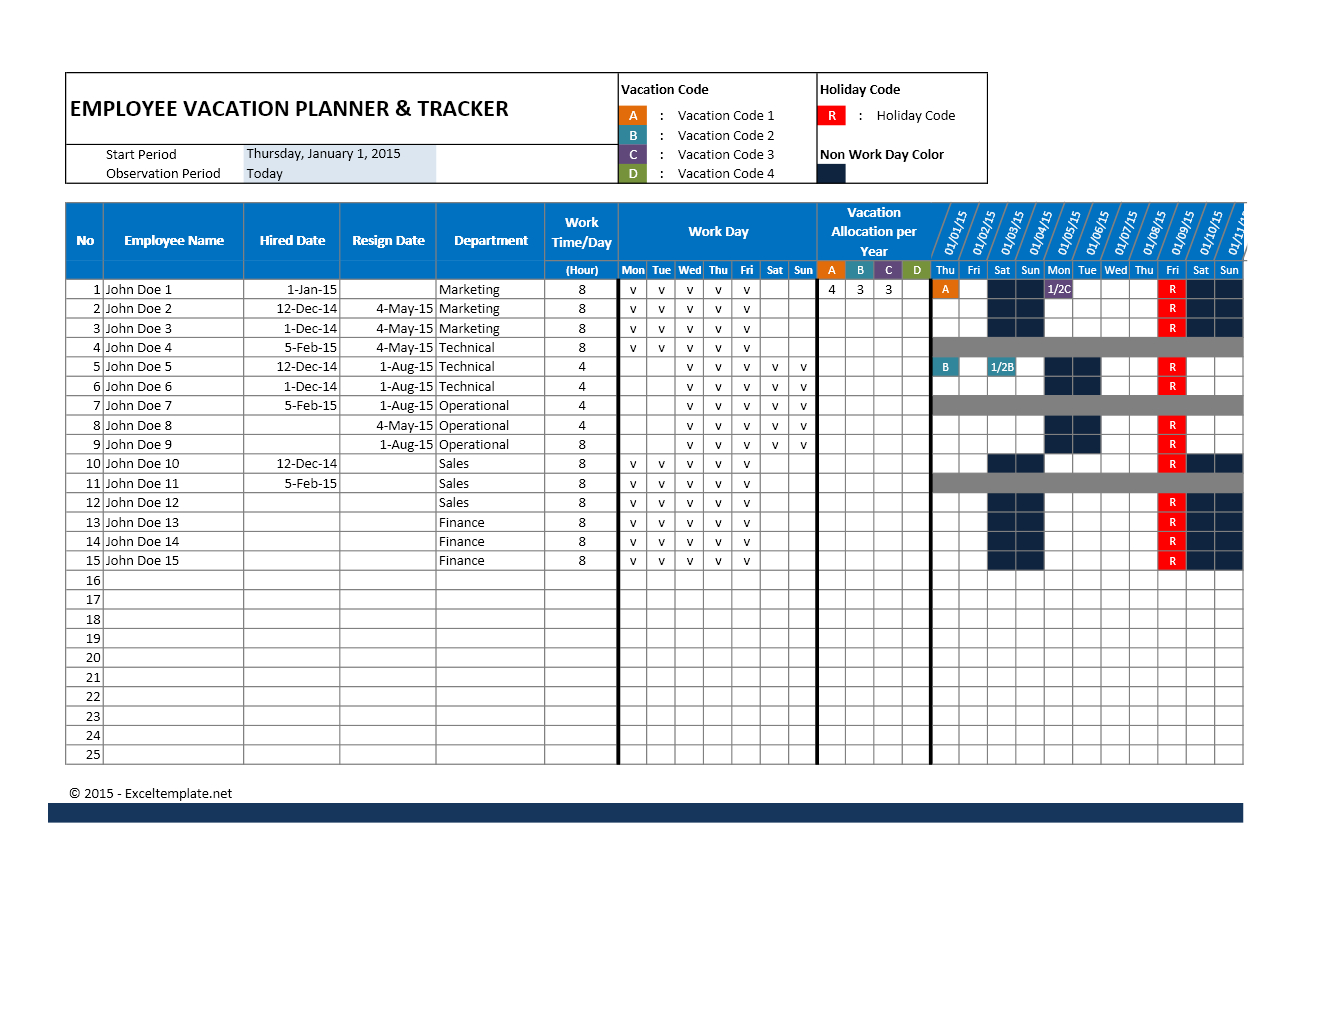 Employee Attendance Calendar And Vacation Planner Spreadsheet Hotel Calendar Printable